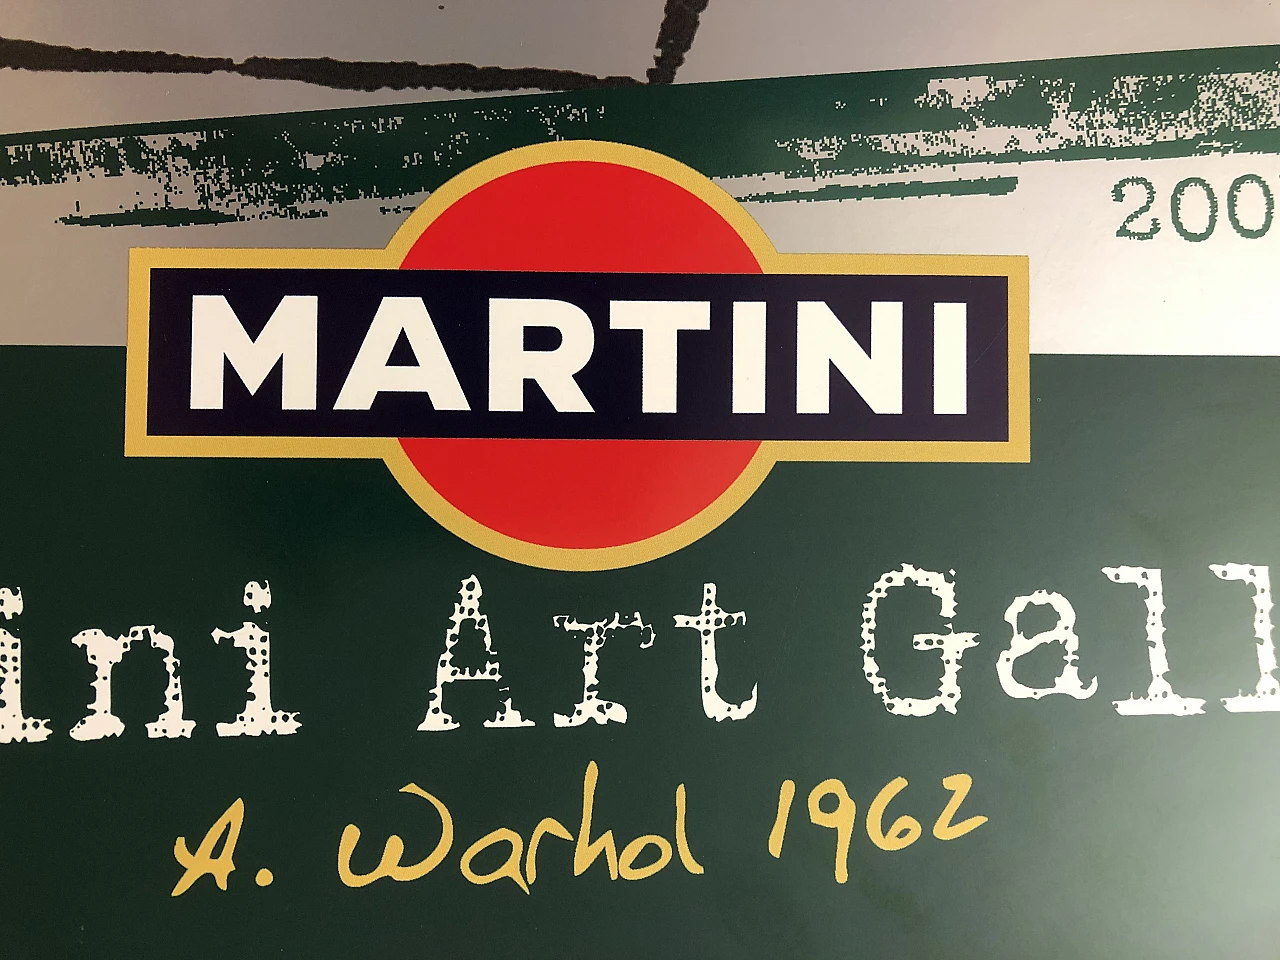 Andy Warhol, Martini Art Gallery (1962), litografia, 2001 8